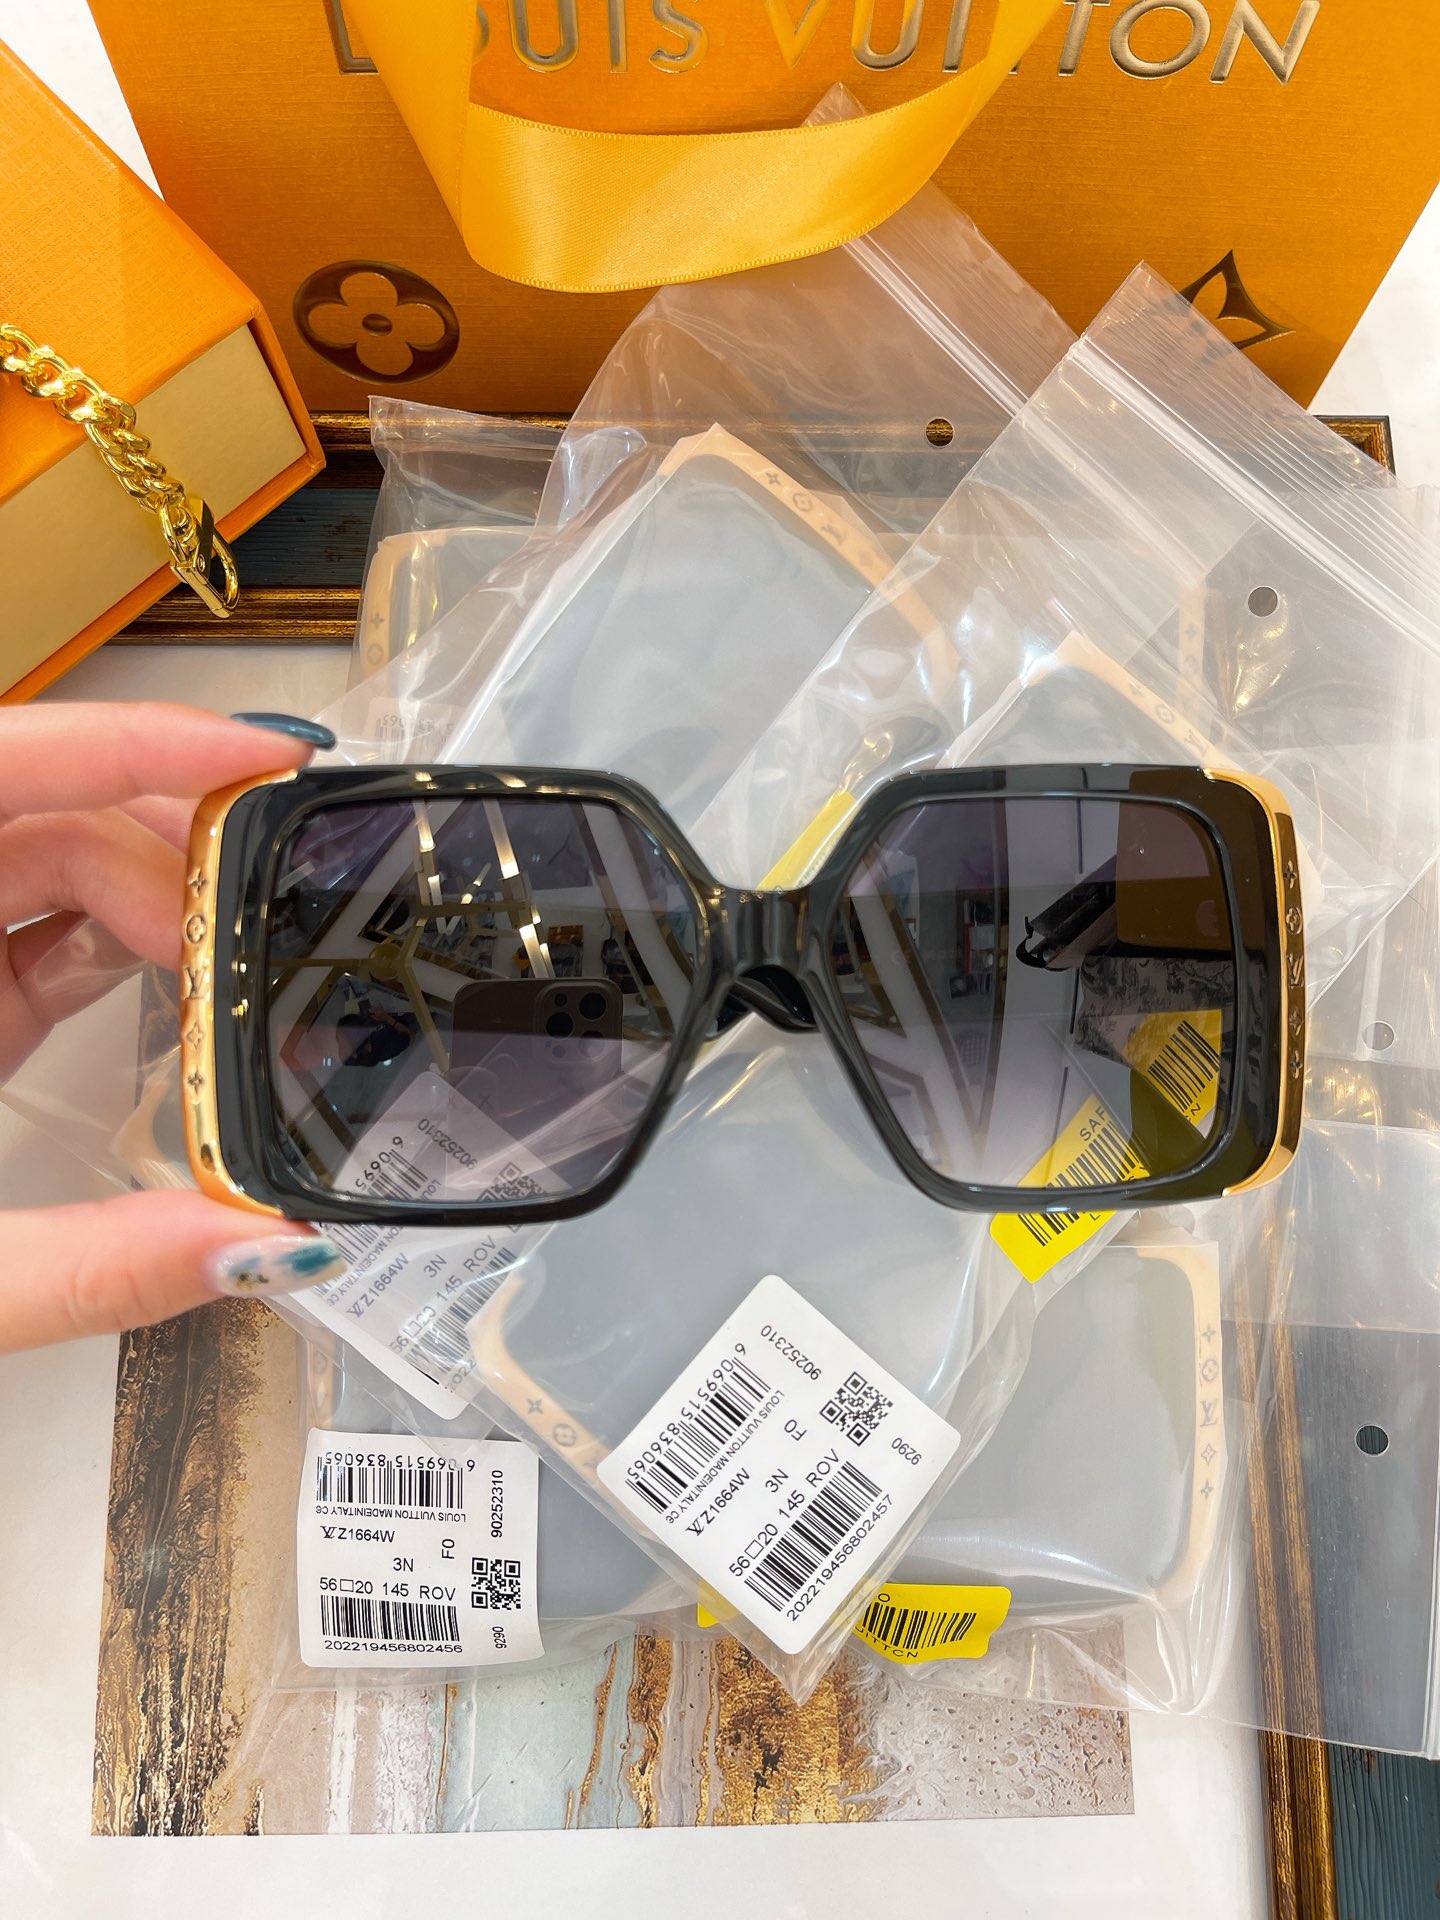 Louis Vuitton LV Moon Square Sunglasses Black for Women